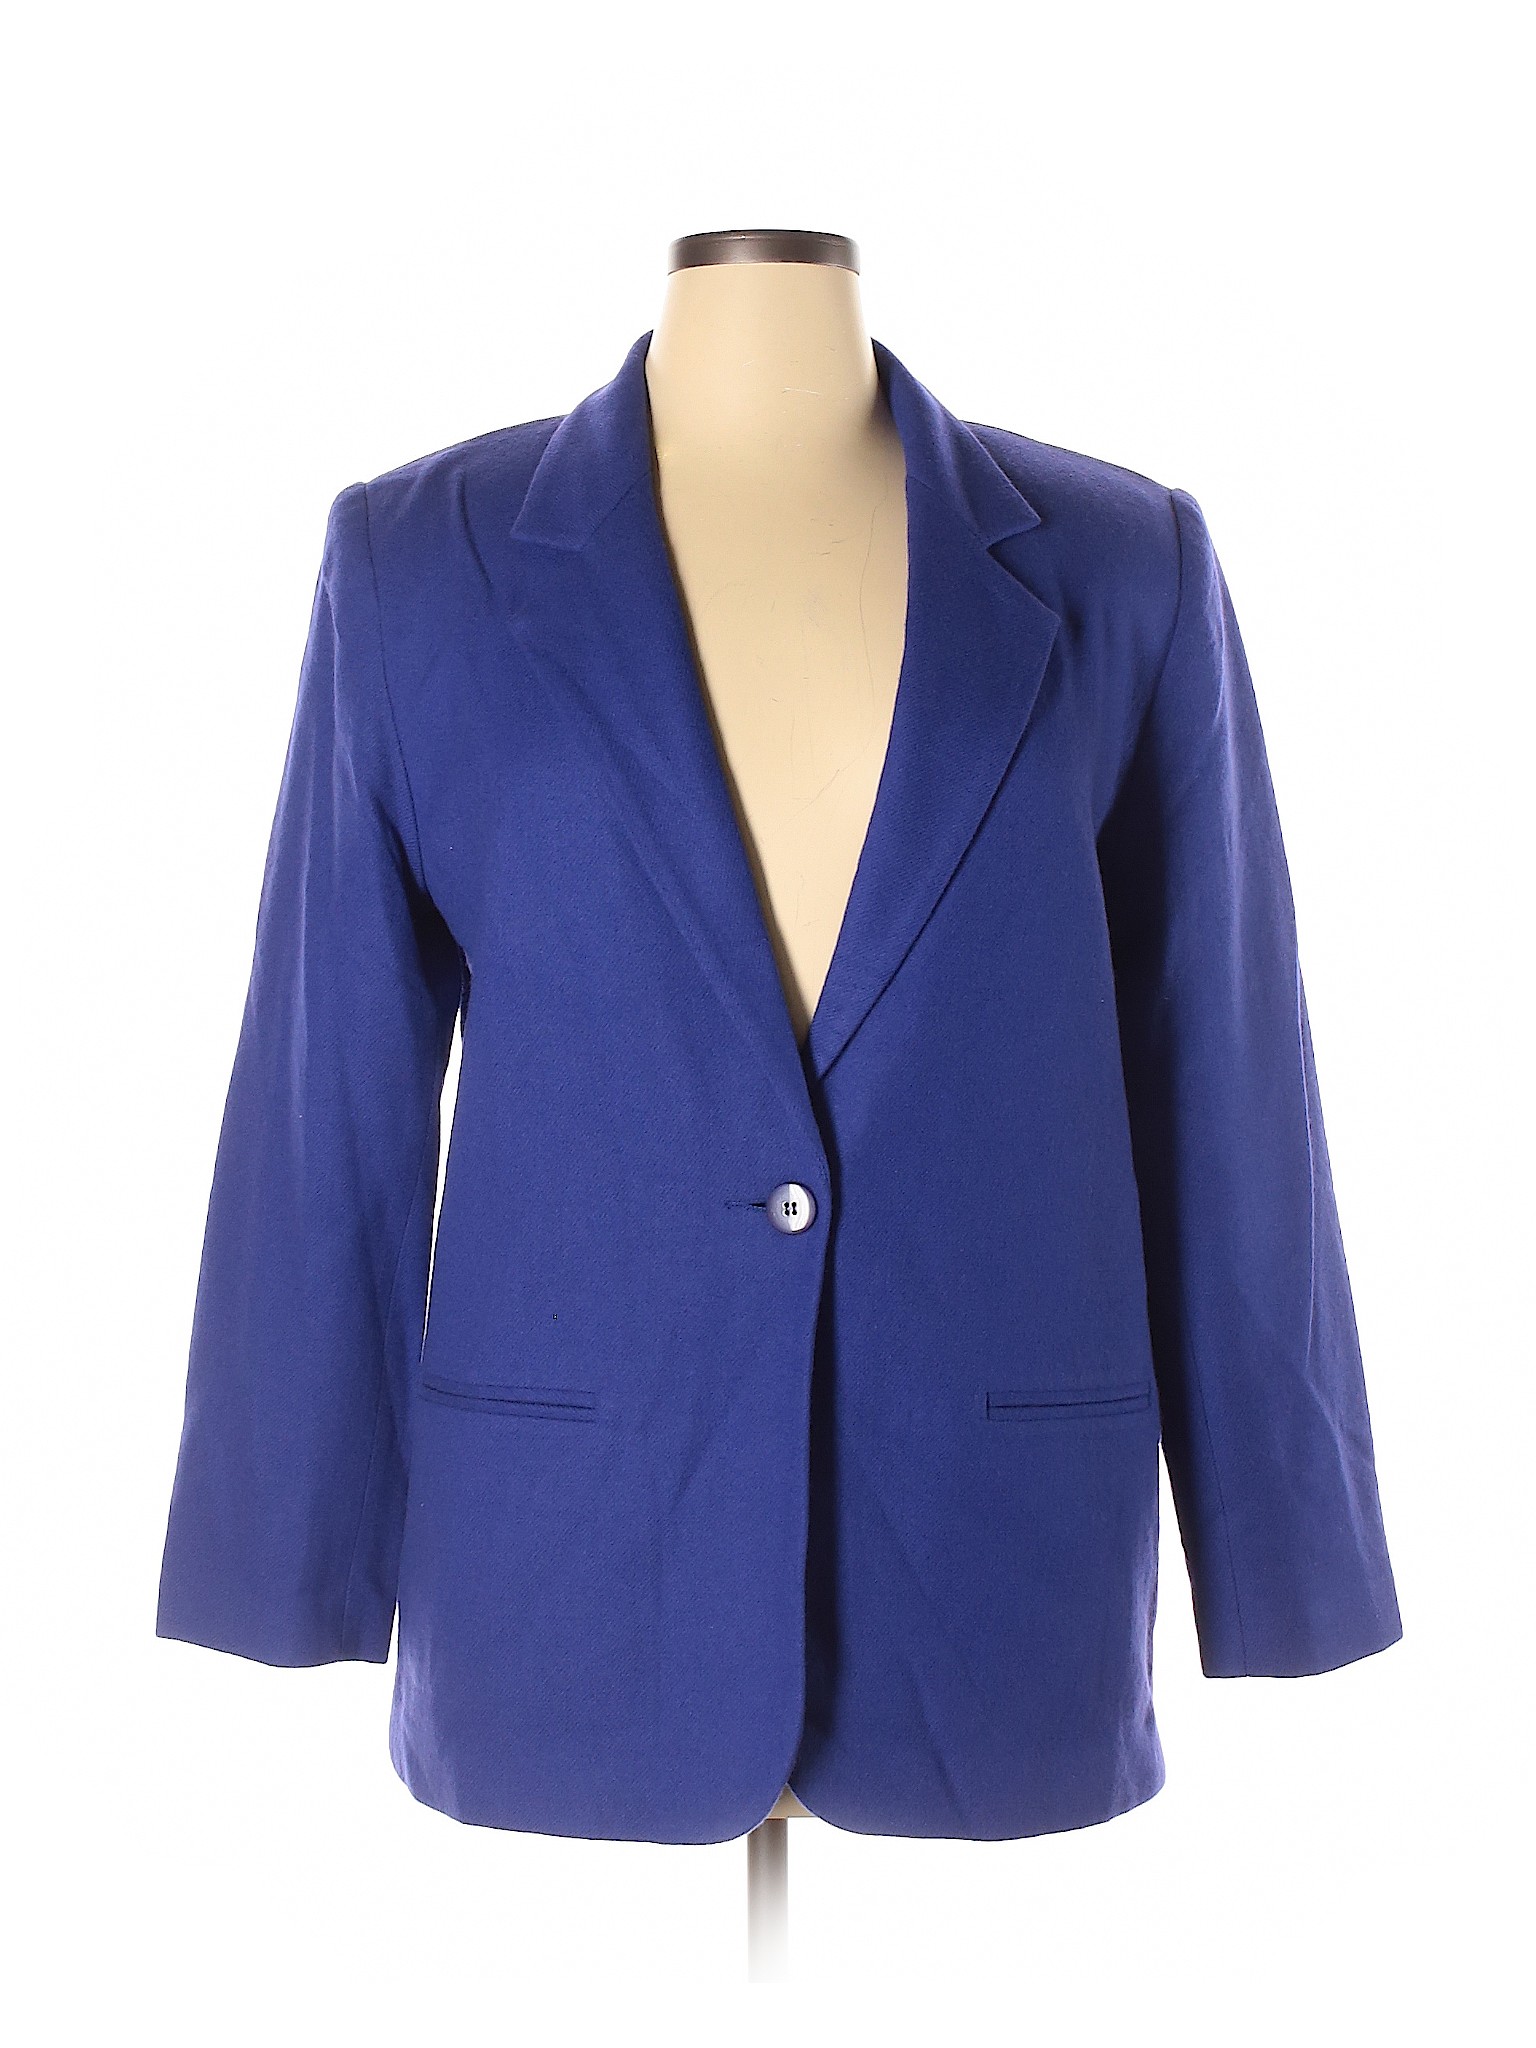 Sag Harbor Women Blue Wool Blazer 14 | eBay